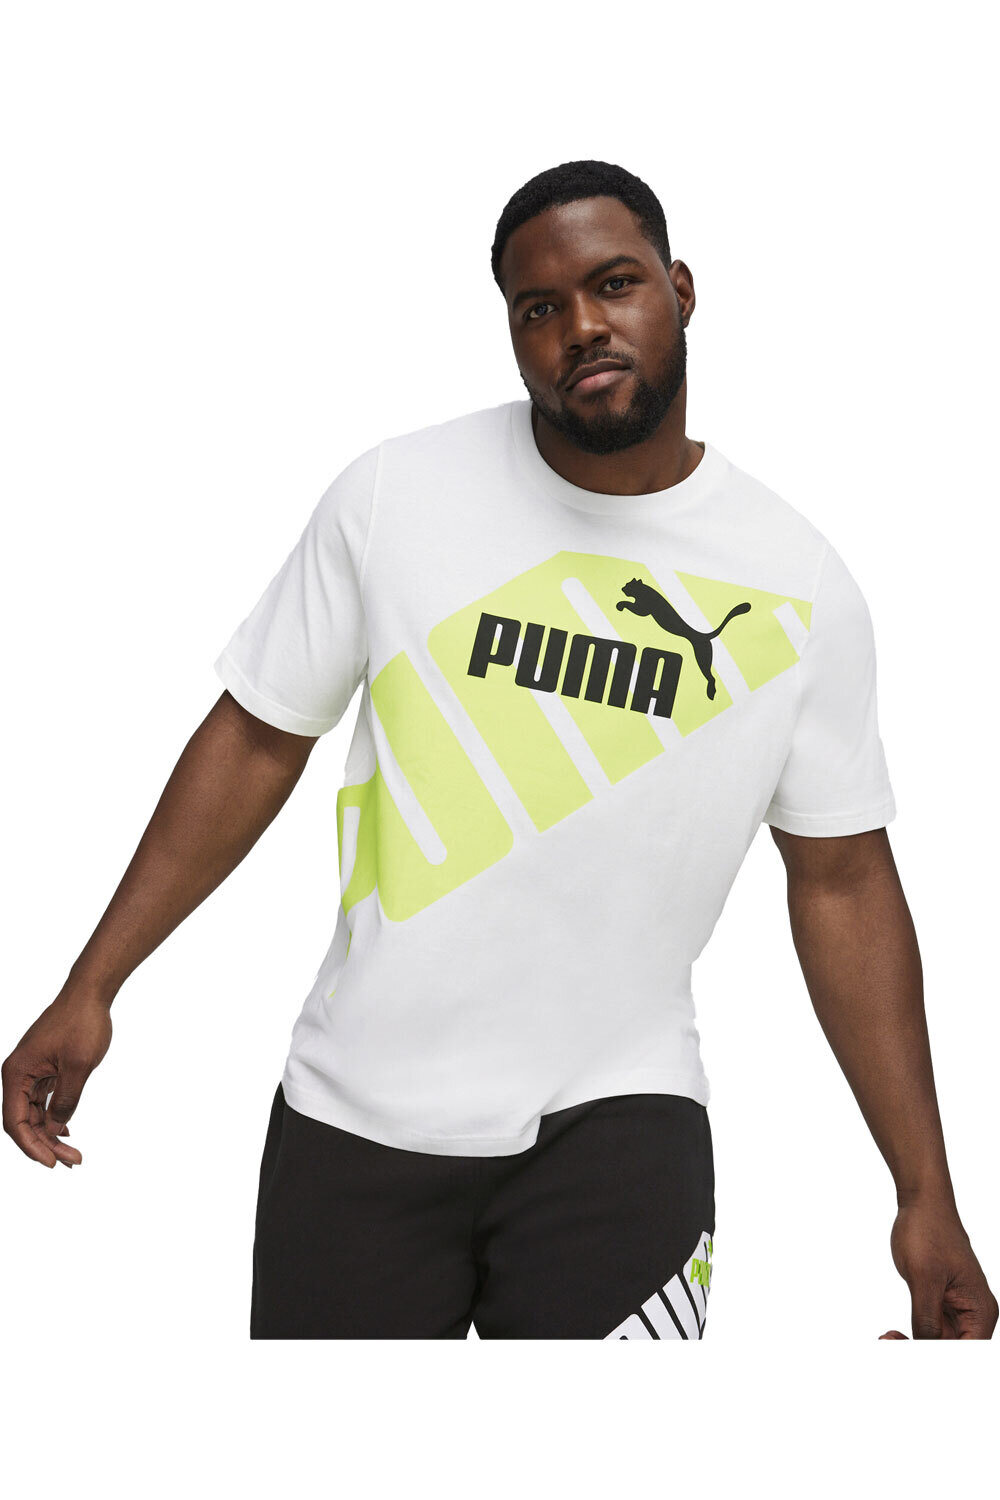 Puma camiseta manga corta hombre PUMA POWER Graphic T vista frontal